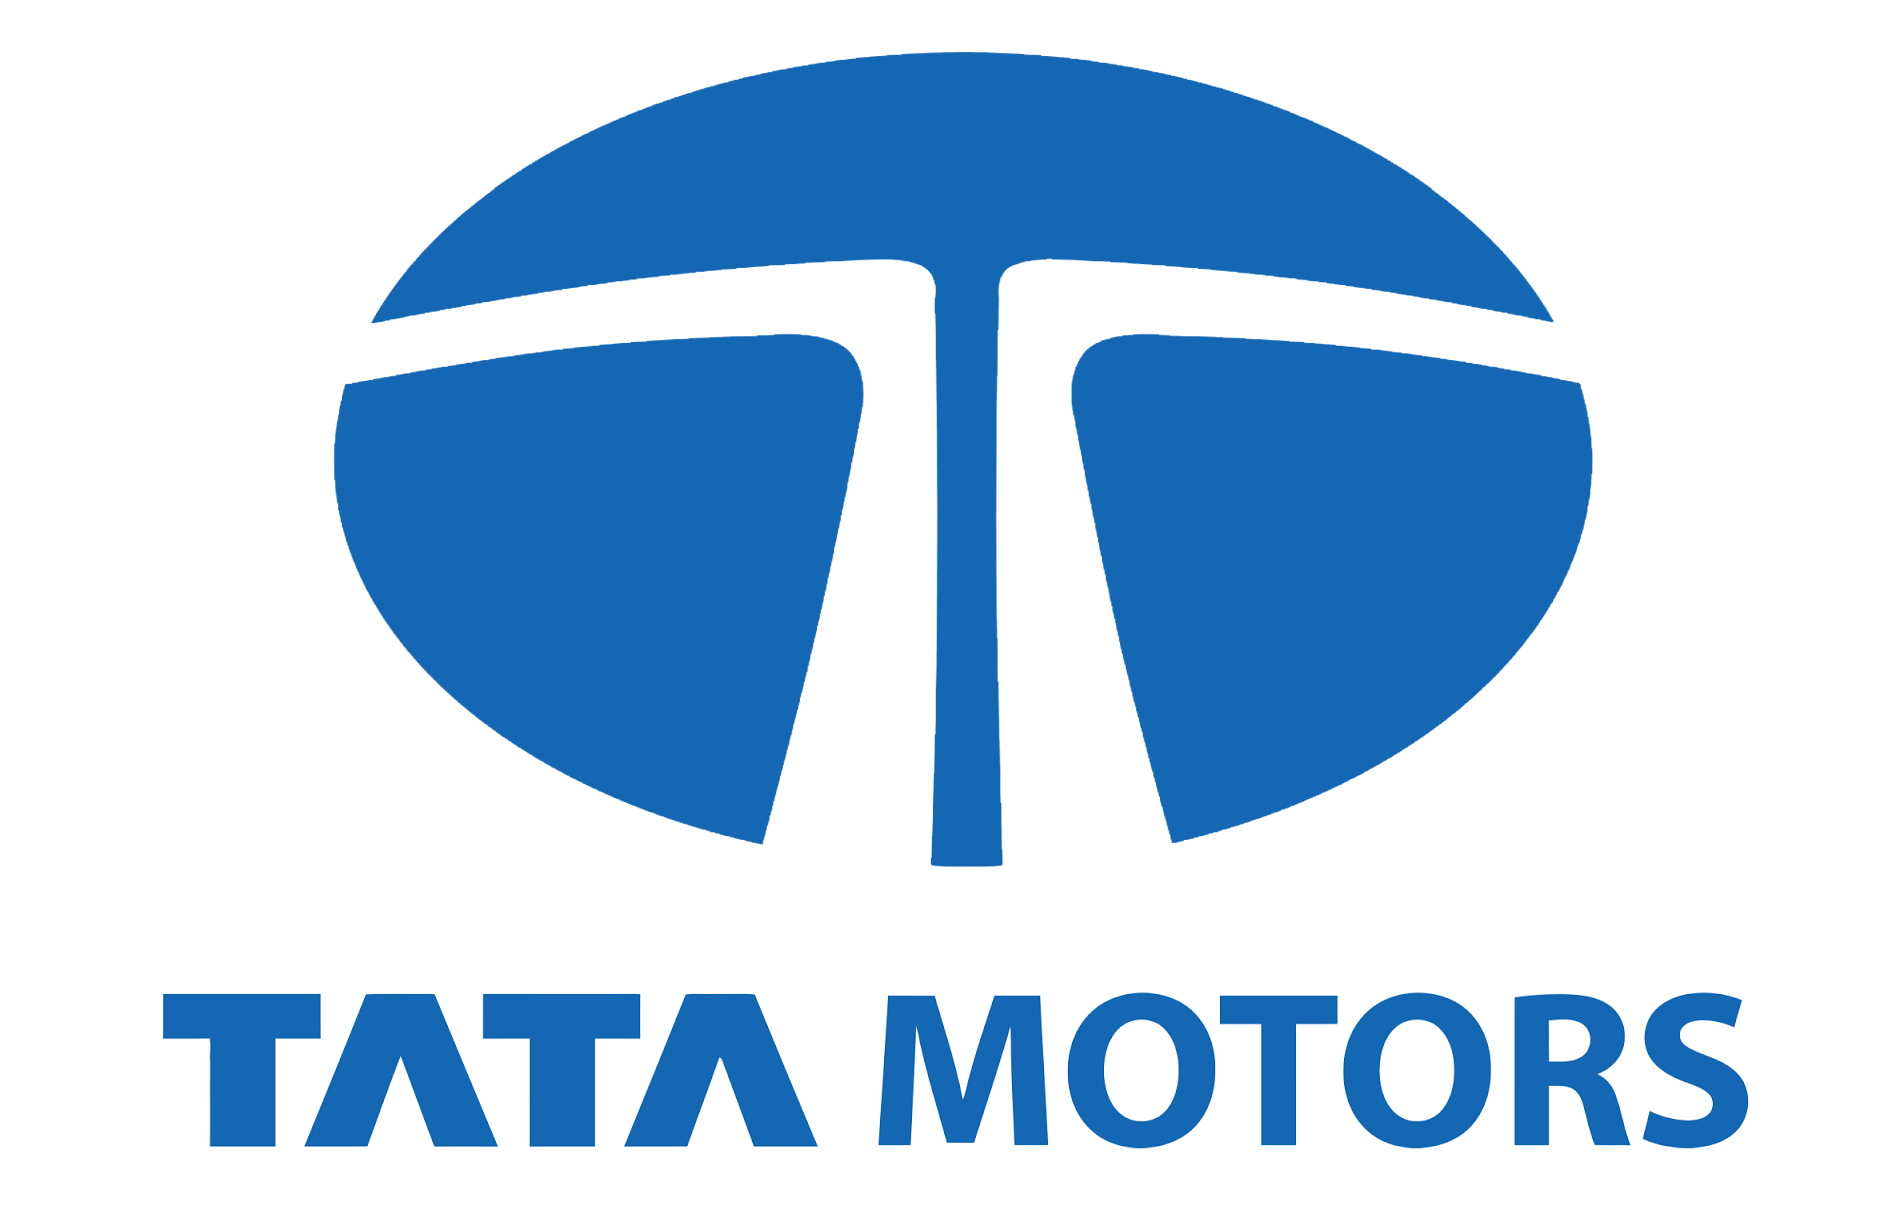 Tata Motors Cars Showroom - Heritage Motors|Show Room|Automotive